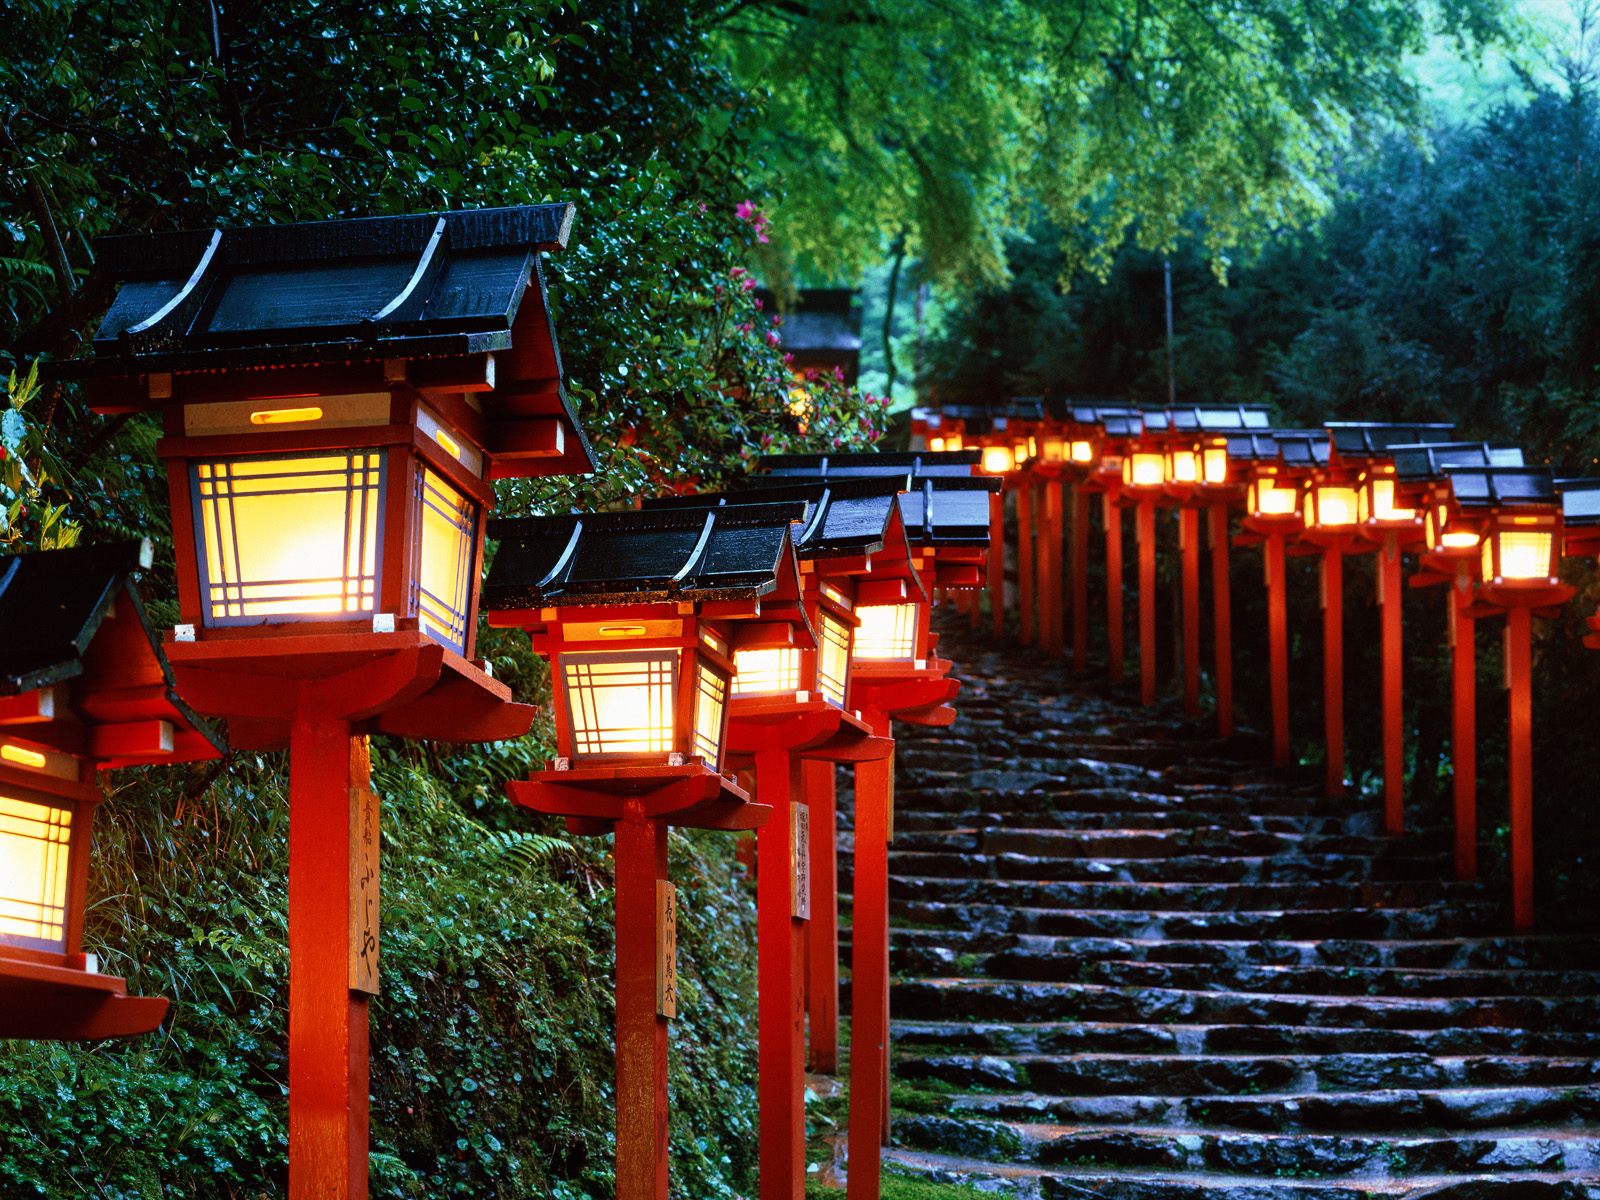 http://3.bp.blogspot.com/-GzdY5-rh_FI/TrRNk3HeW_I/AAAAAAAAA3I/kn2lH5wlvR0/s1600/Kibune-Shrine-Kyoto-Japan-1-1600x1200.jpg